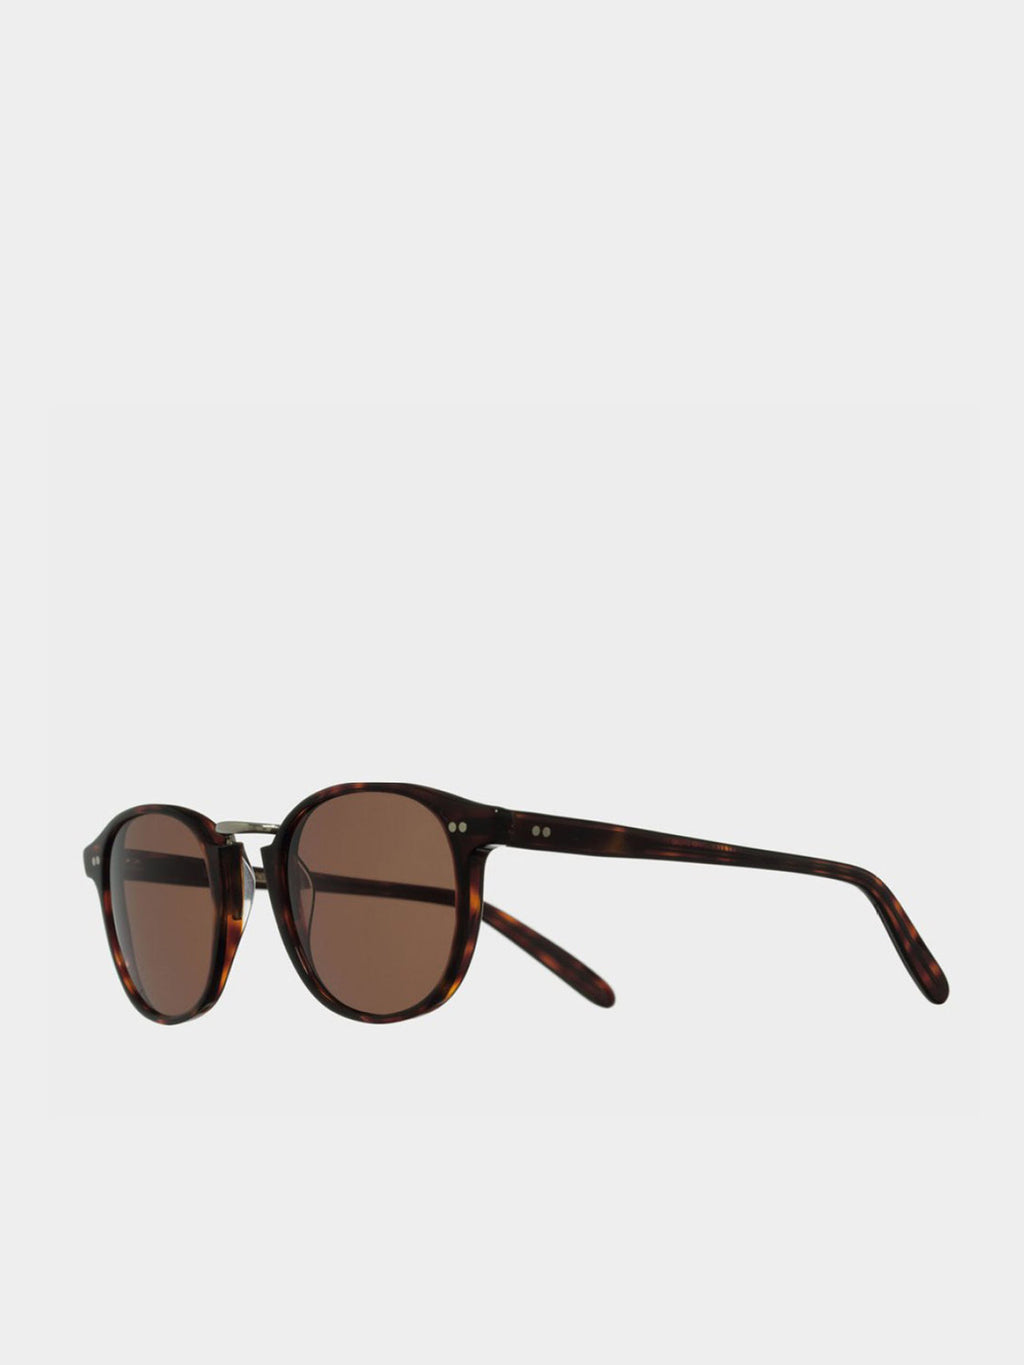 CELINE Acetate Sunglasses CL40046U Dark Havana 52mm. 52 21 145 | eBay